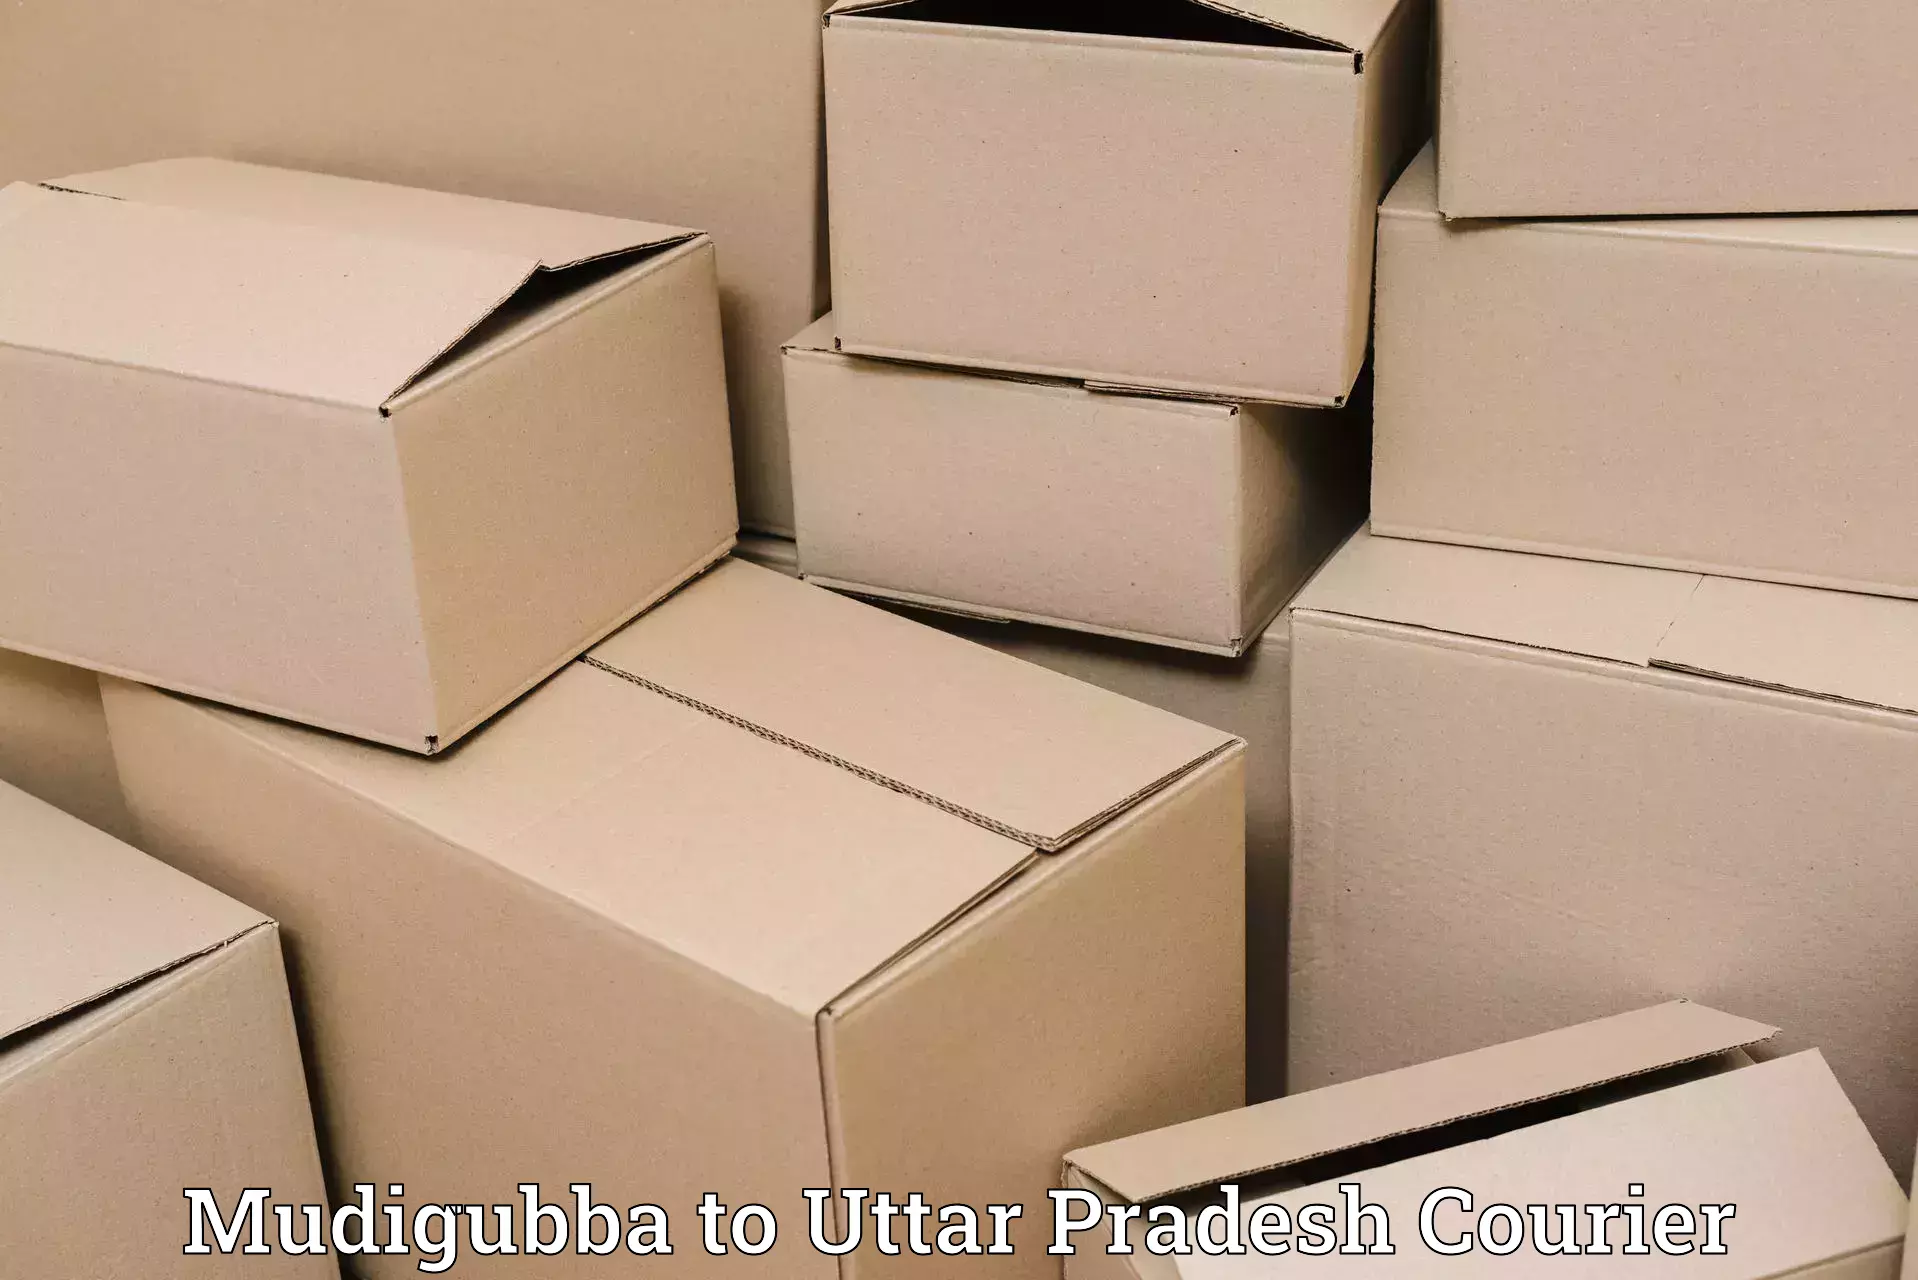 Supply chain efficiency Mudigubba to Khurja